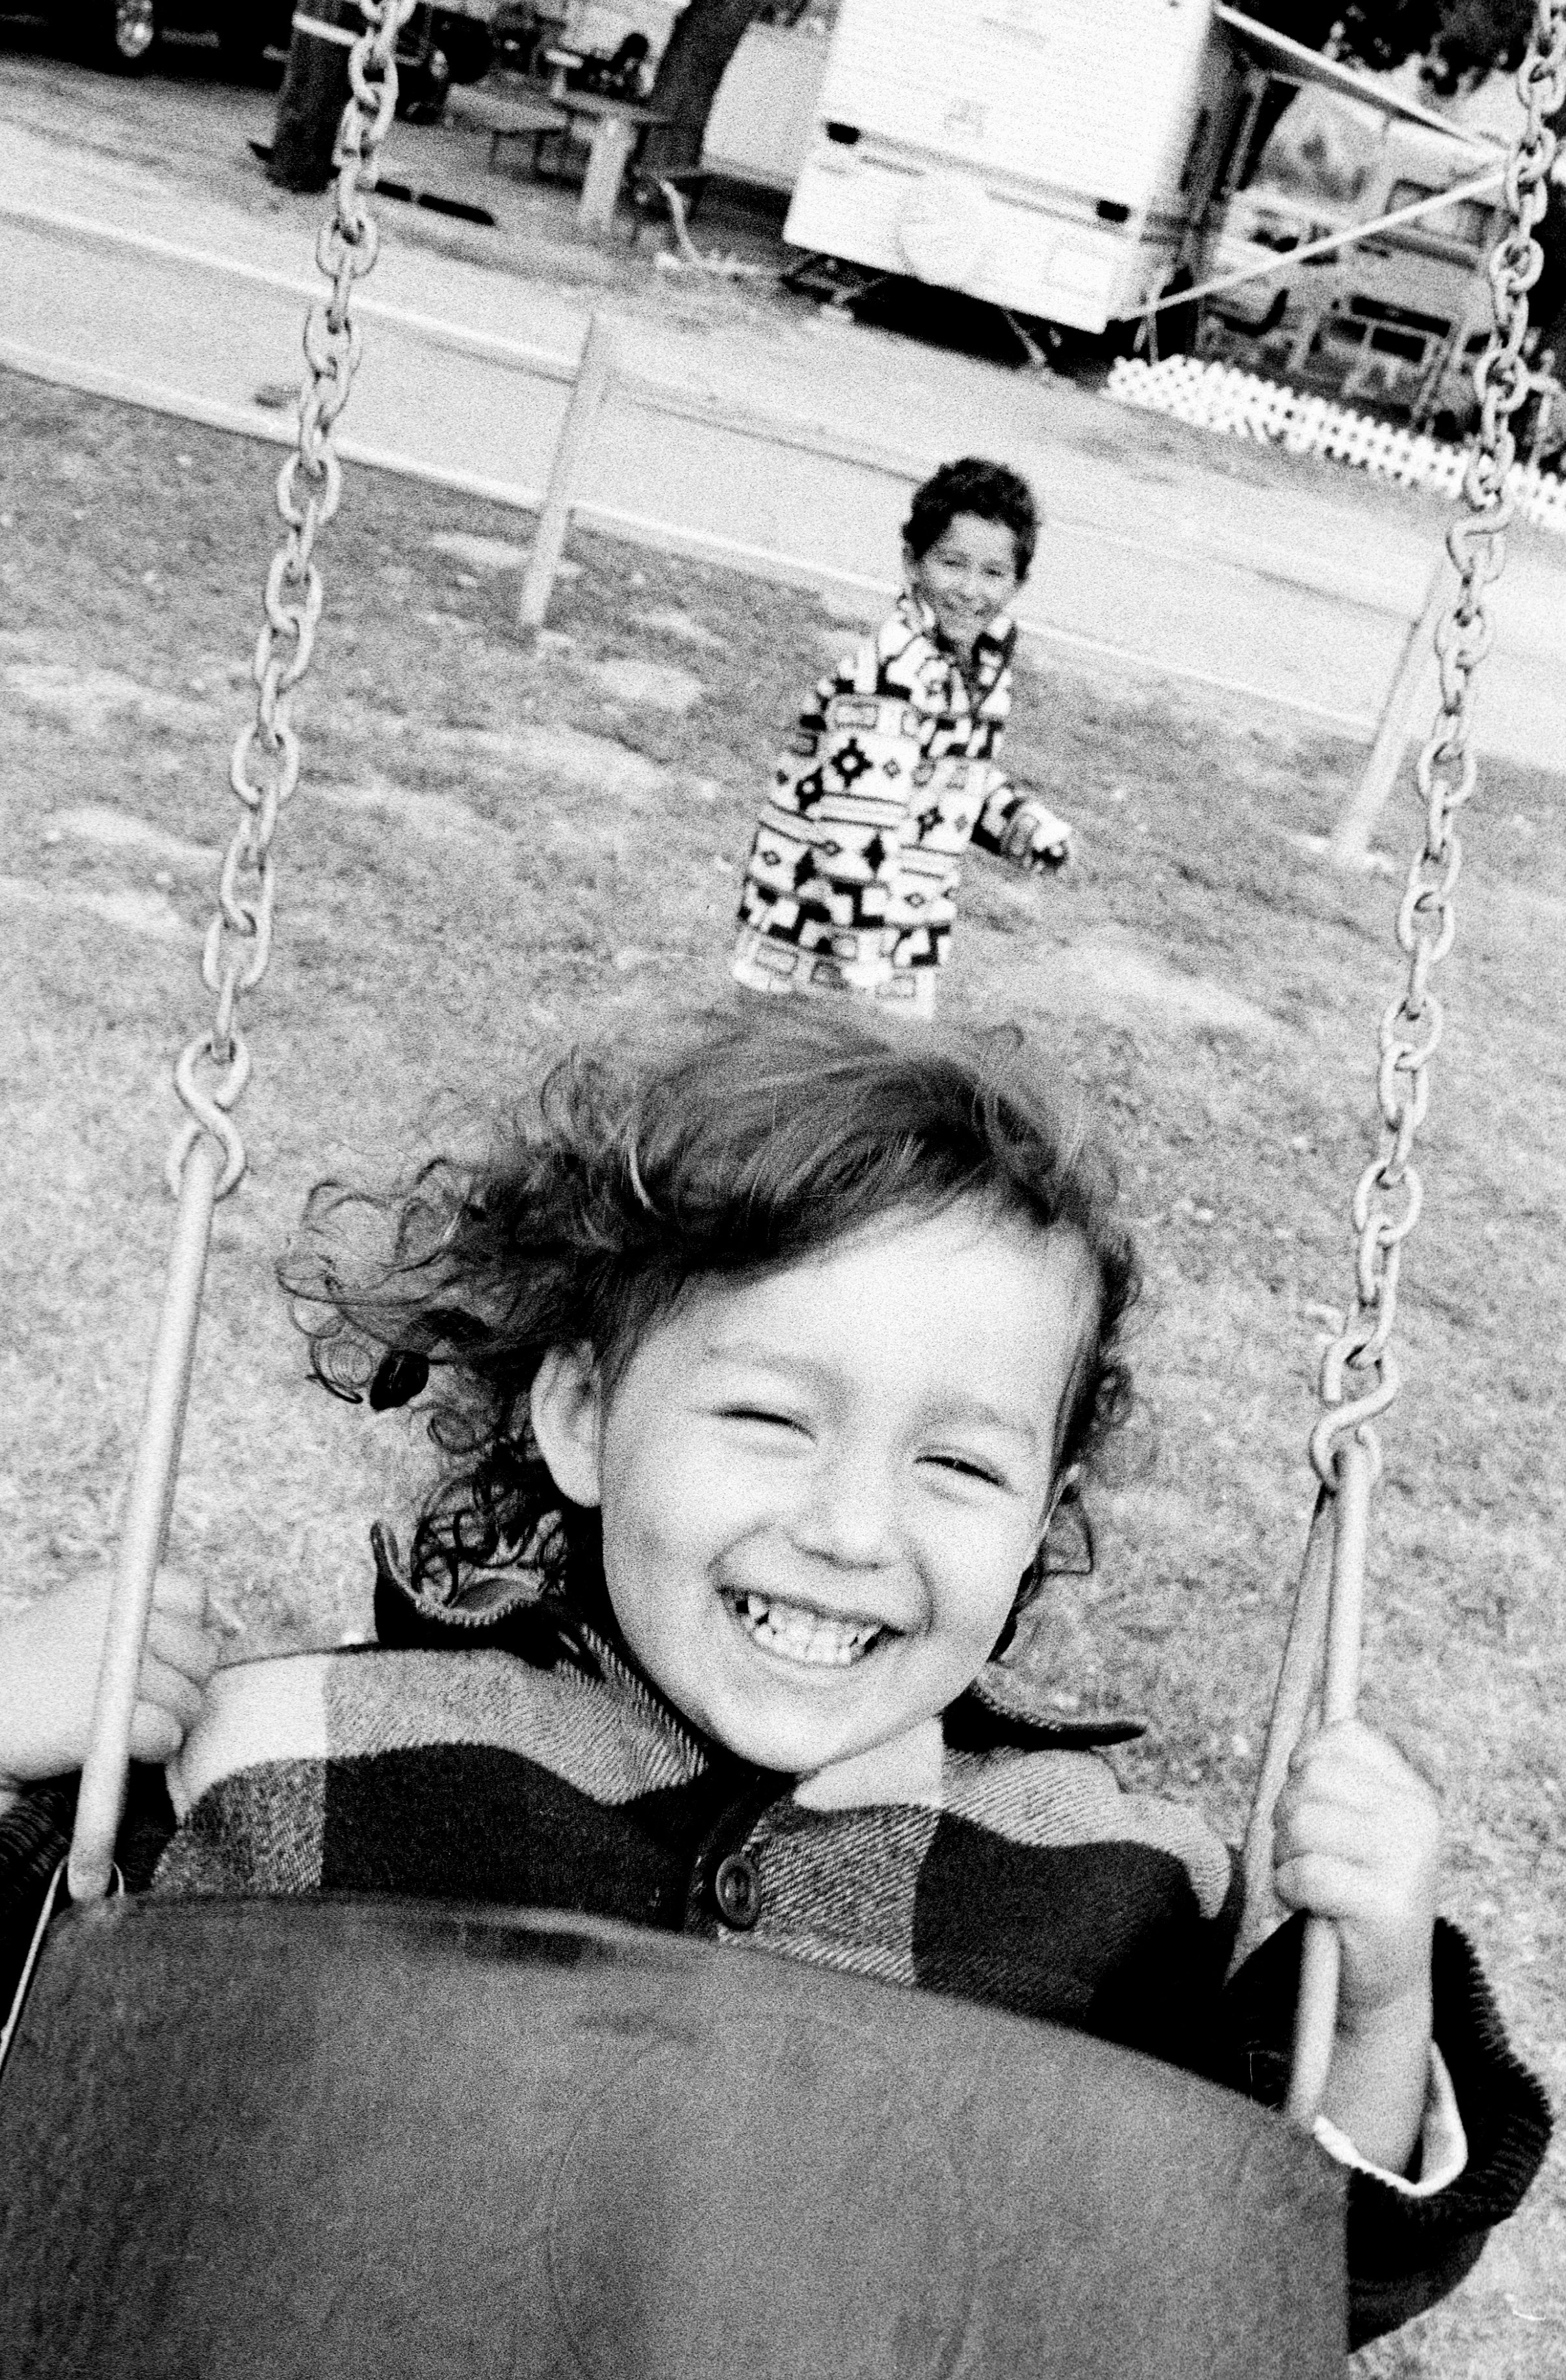  Isabel and Elijah Kashi playing on a swing set at a Joshua Tree camp site. 2000 